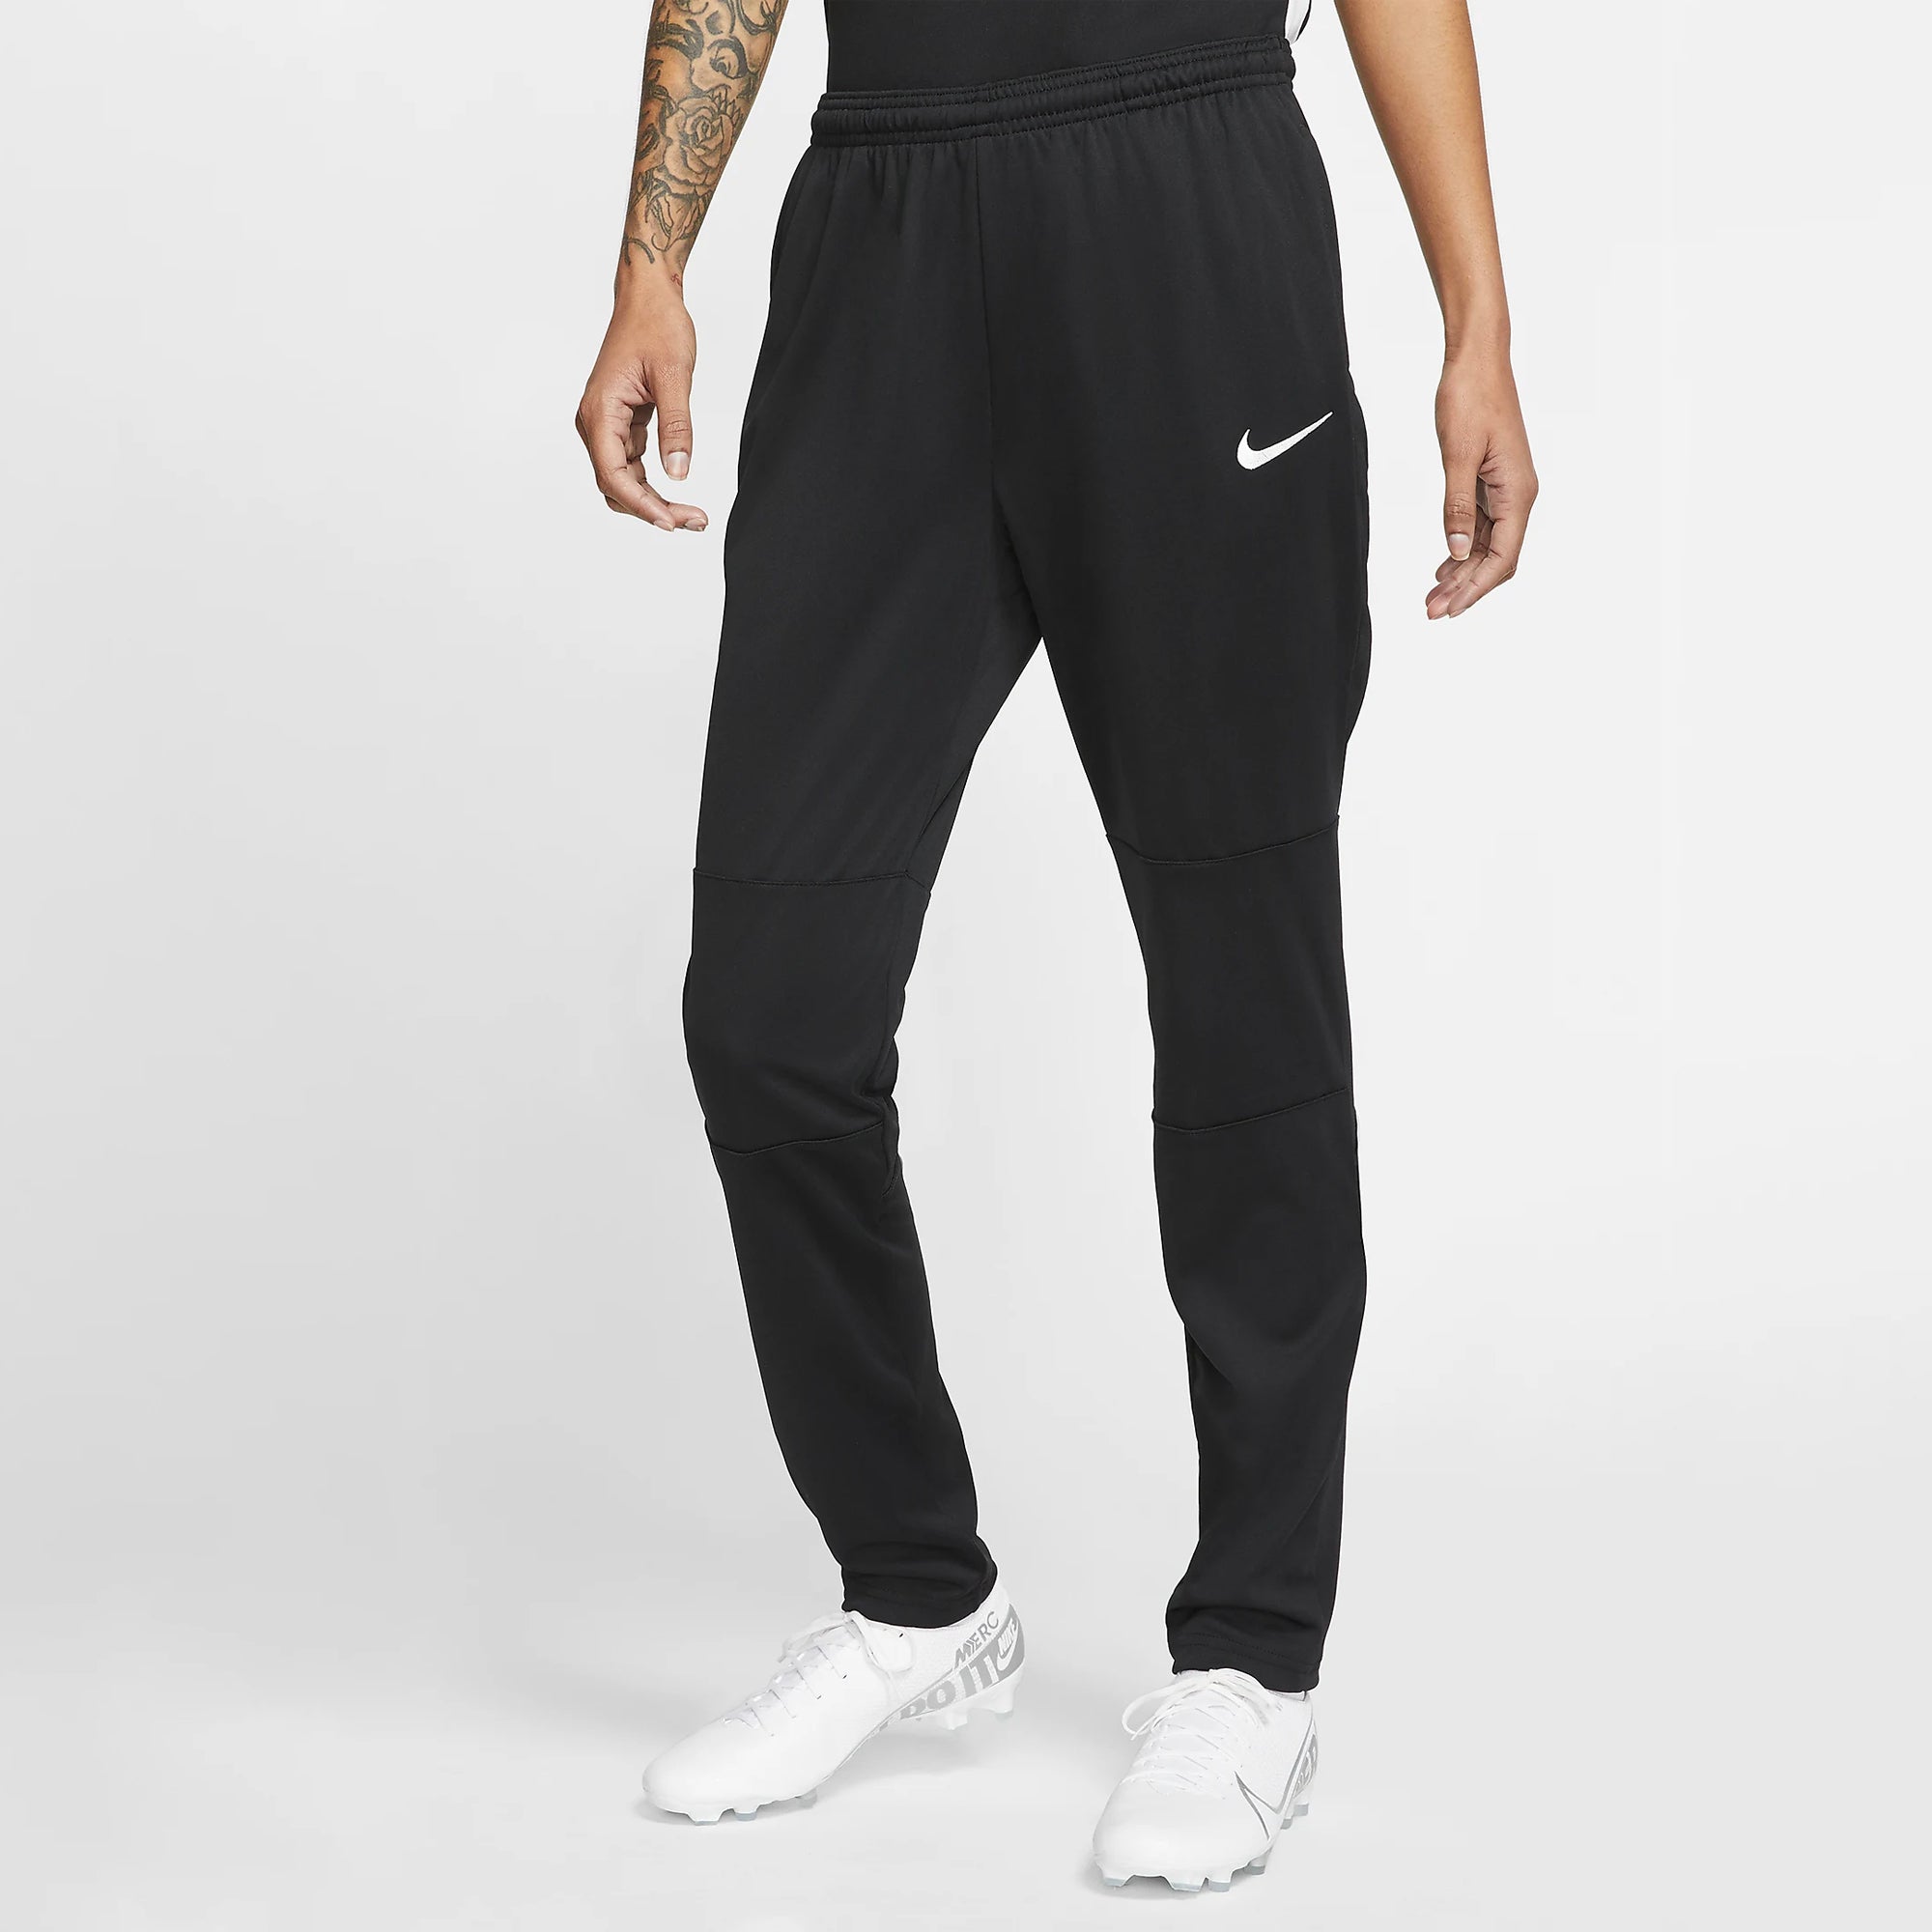 Nike Dri-FIT Women's Soccer Pants